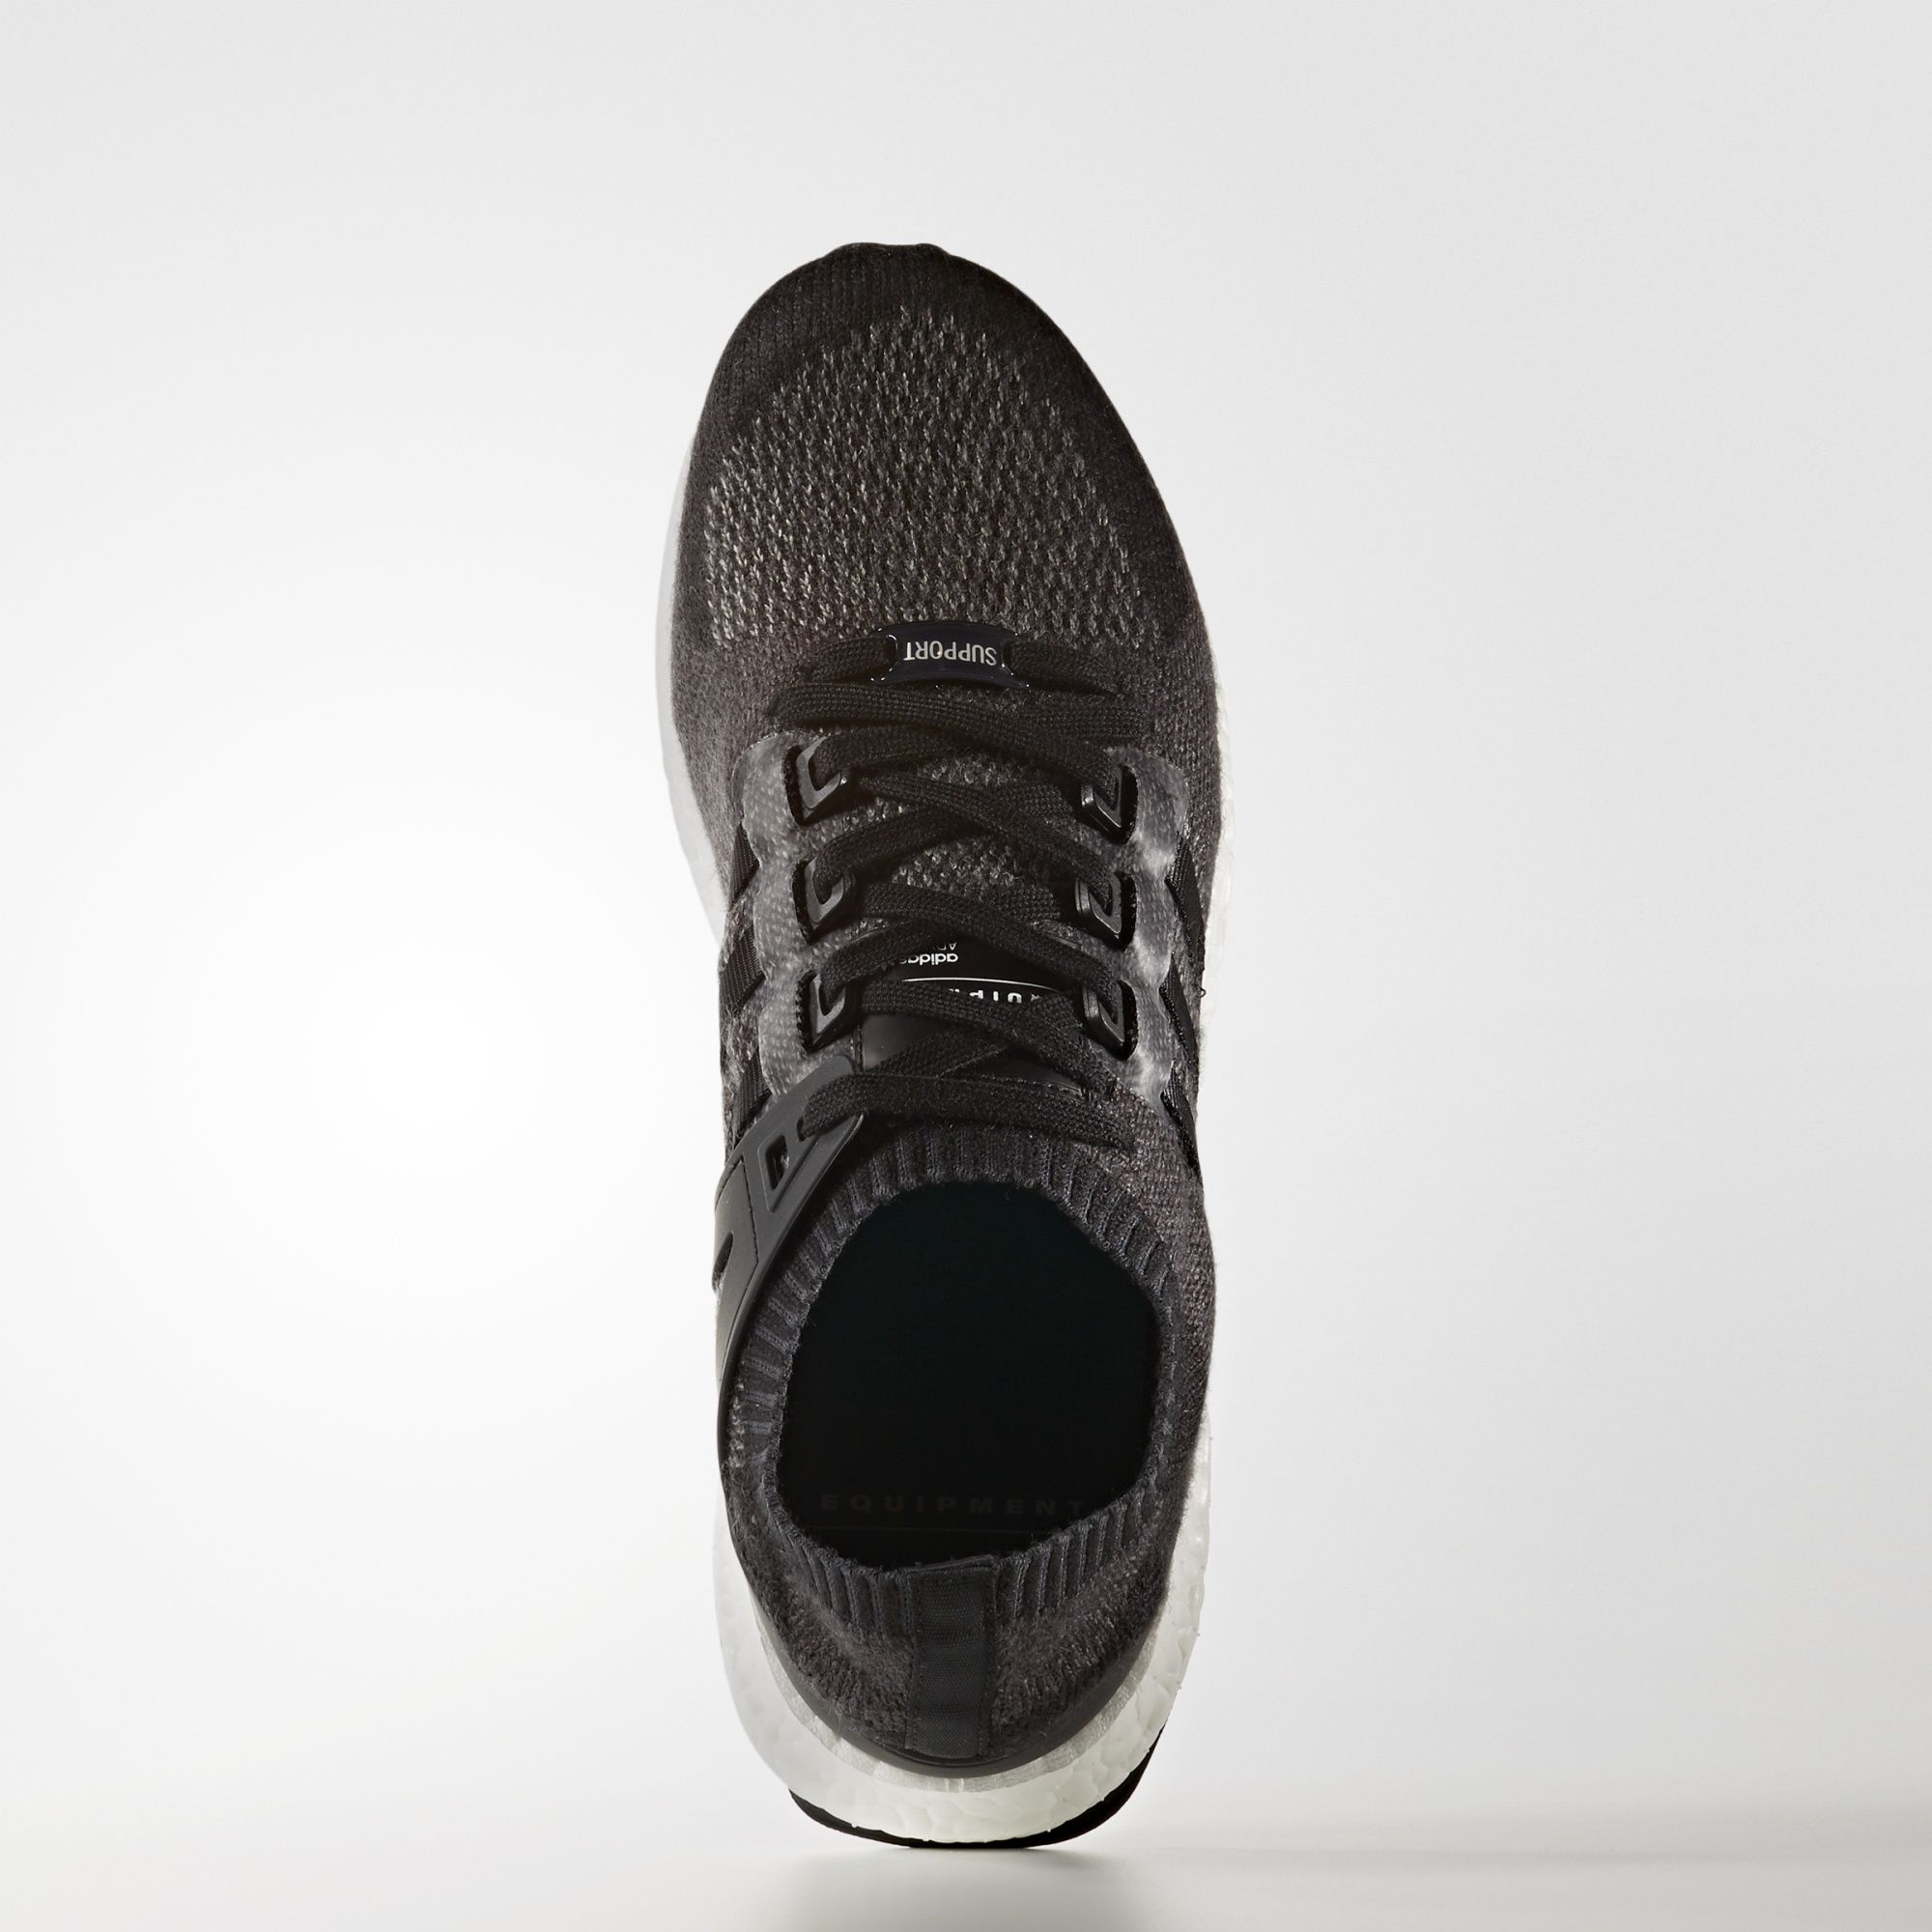 Adidas EQT Support Ultra Primeknit
Core Black / Footwear White